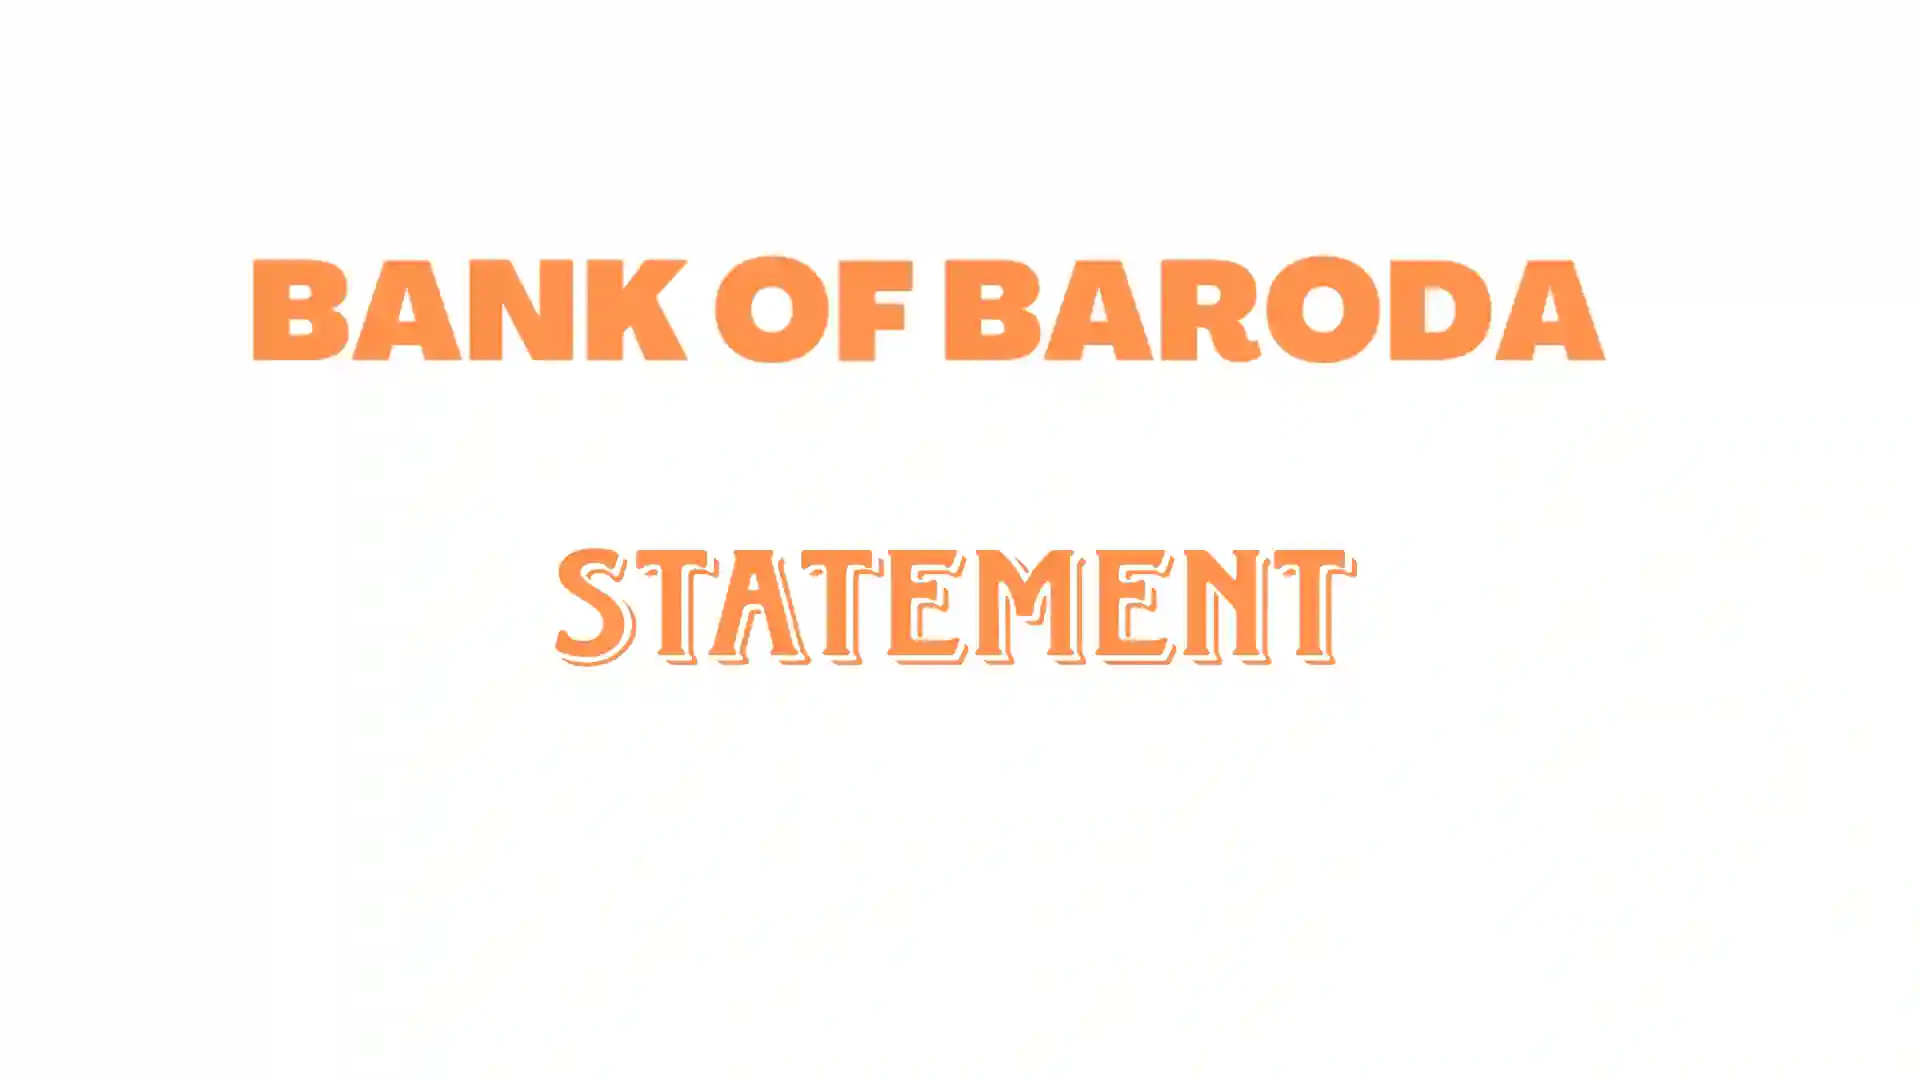 Bank-of-baroda-ka-statement-kaise-nikale